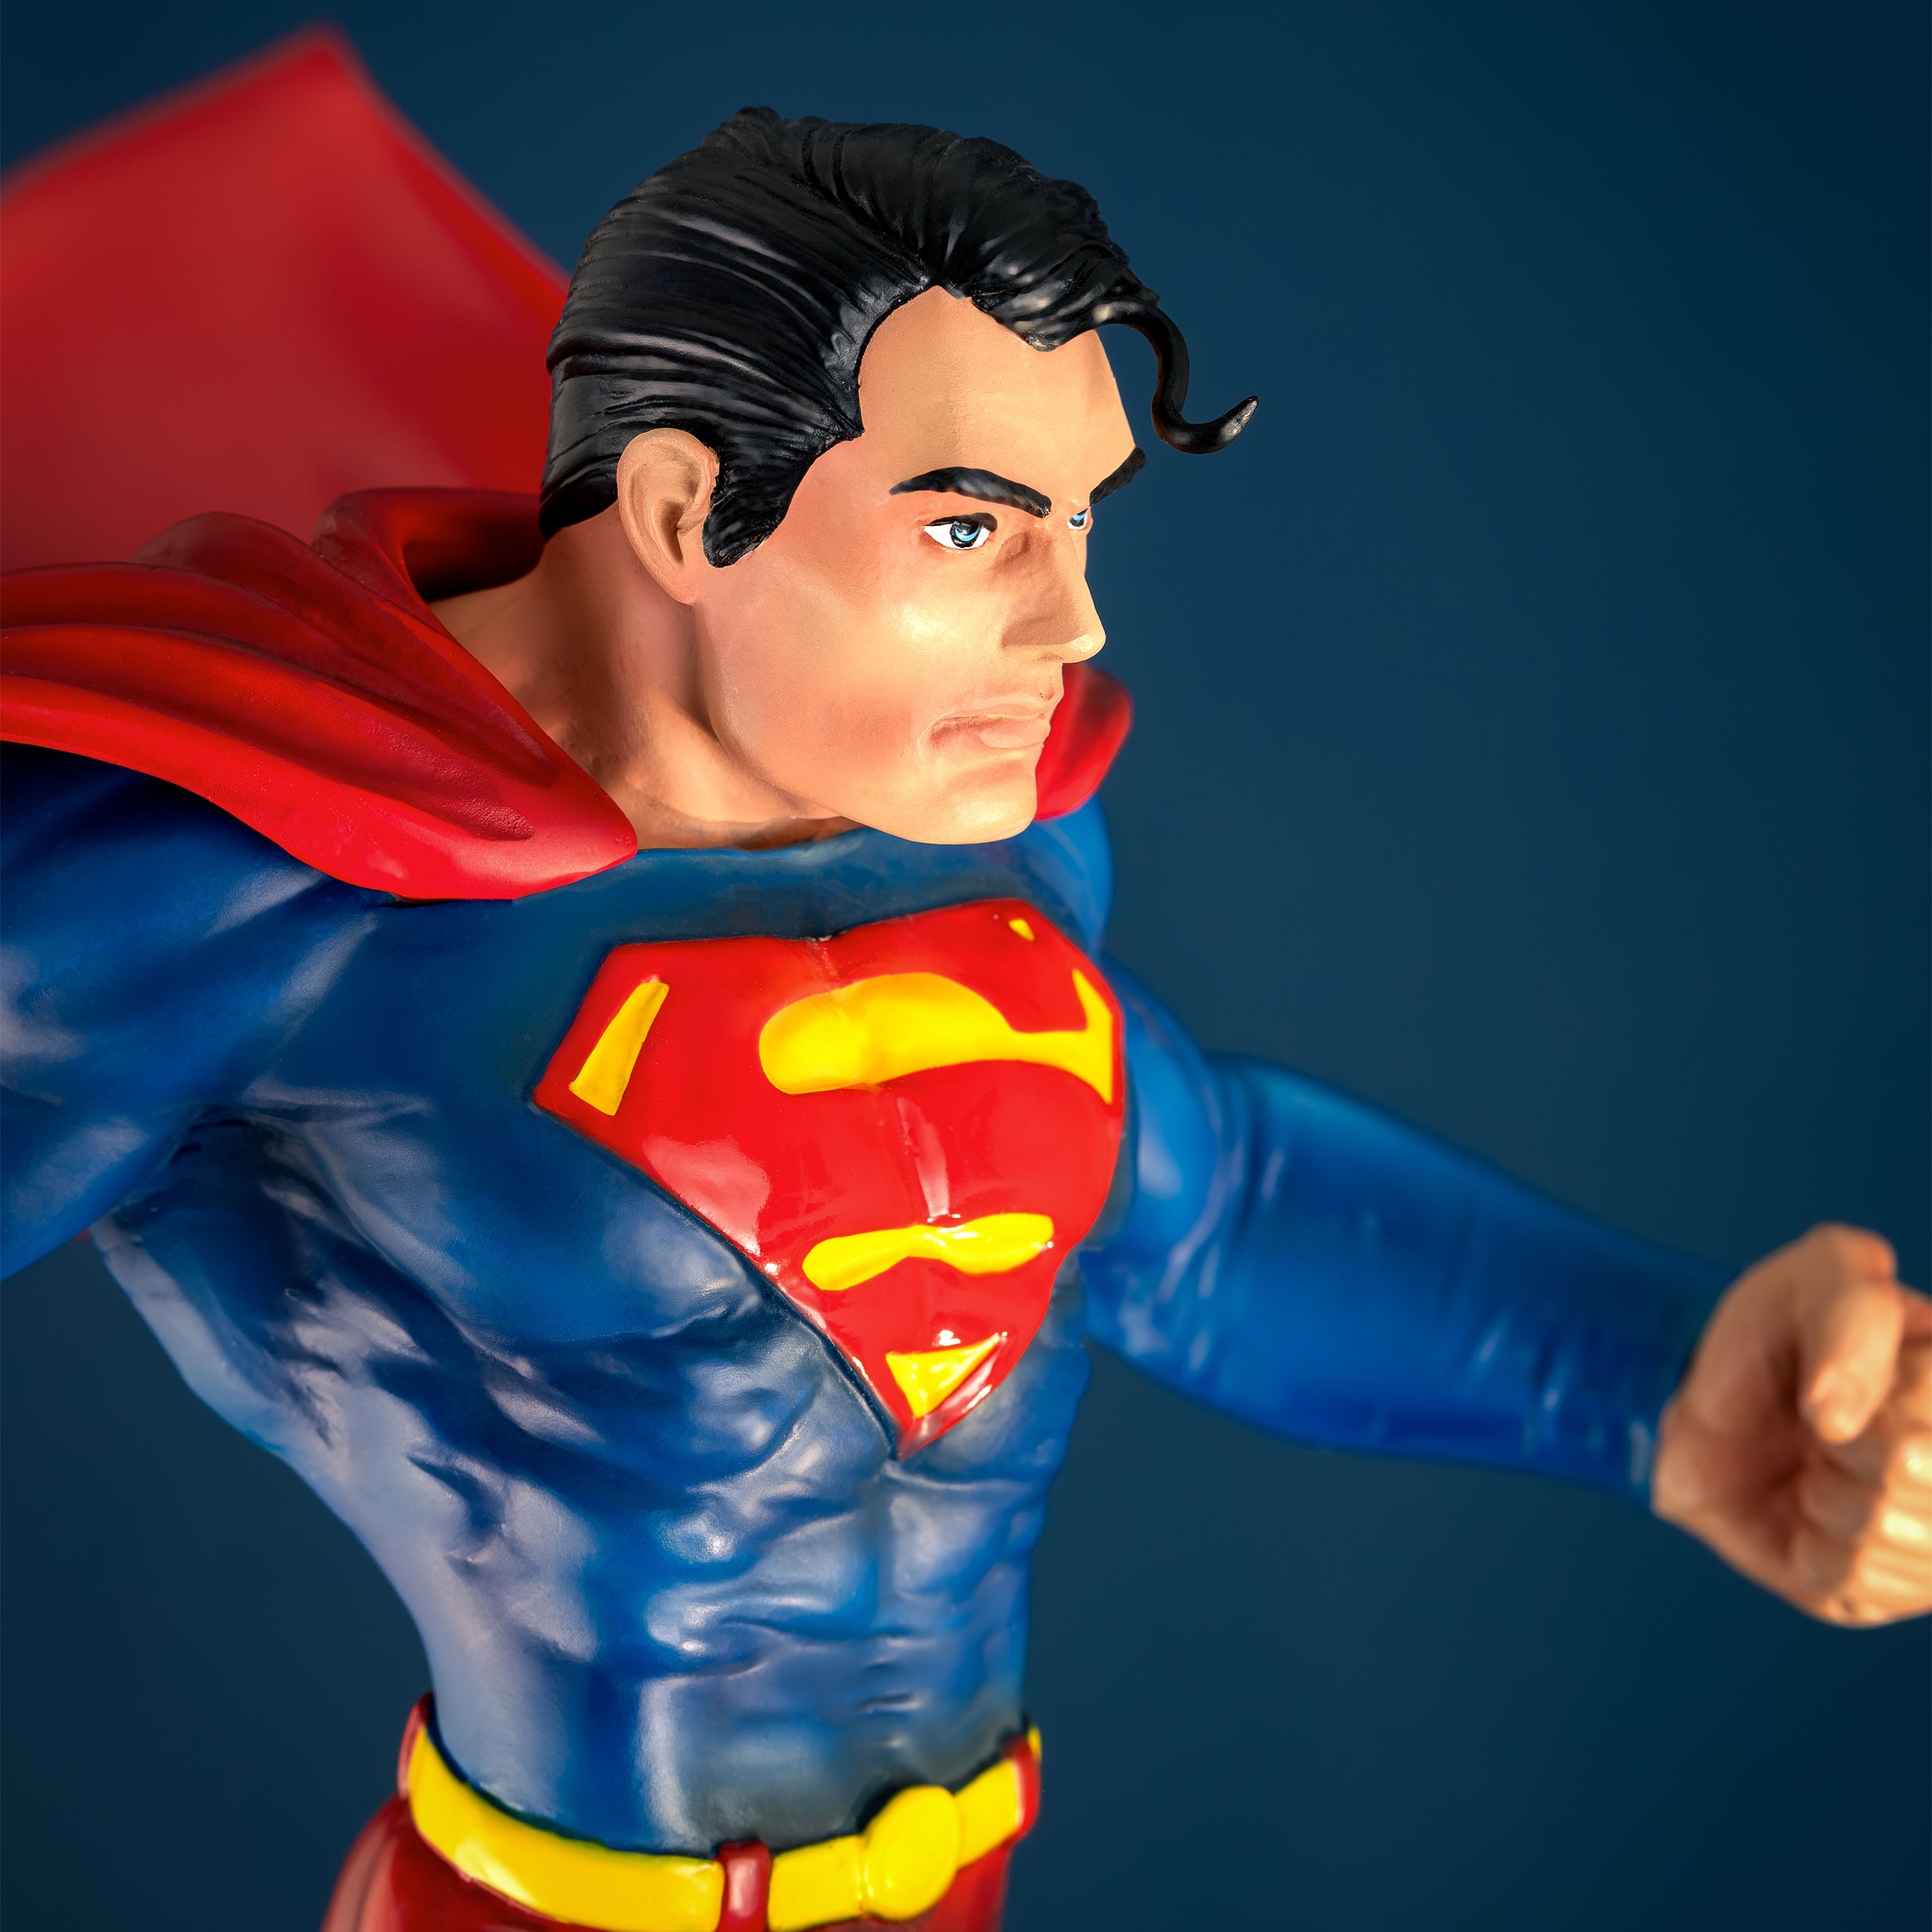 Superman Comic Statue